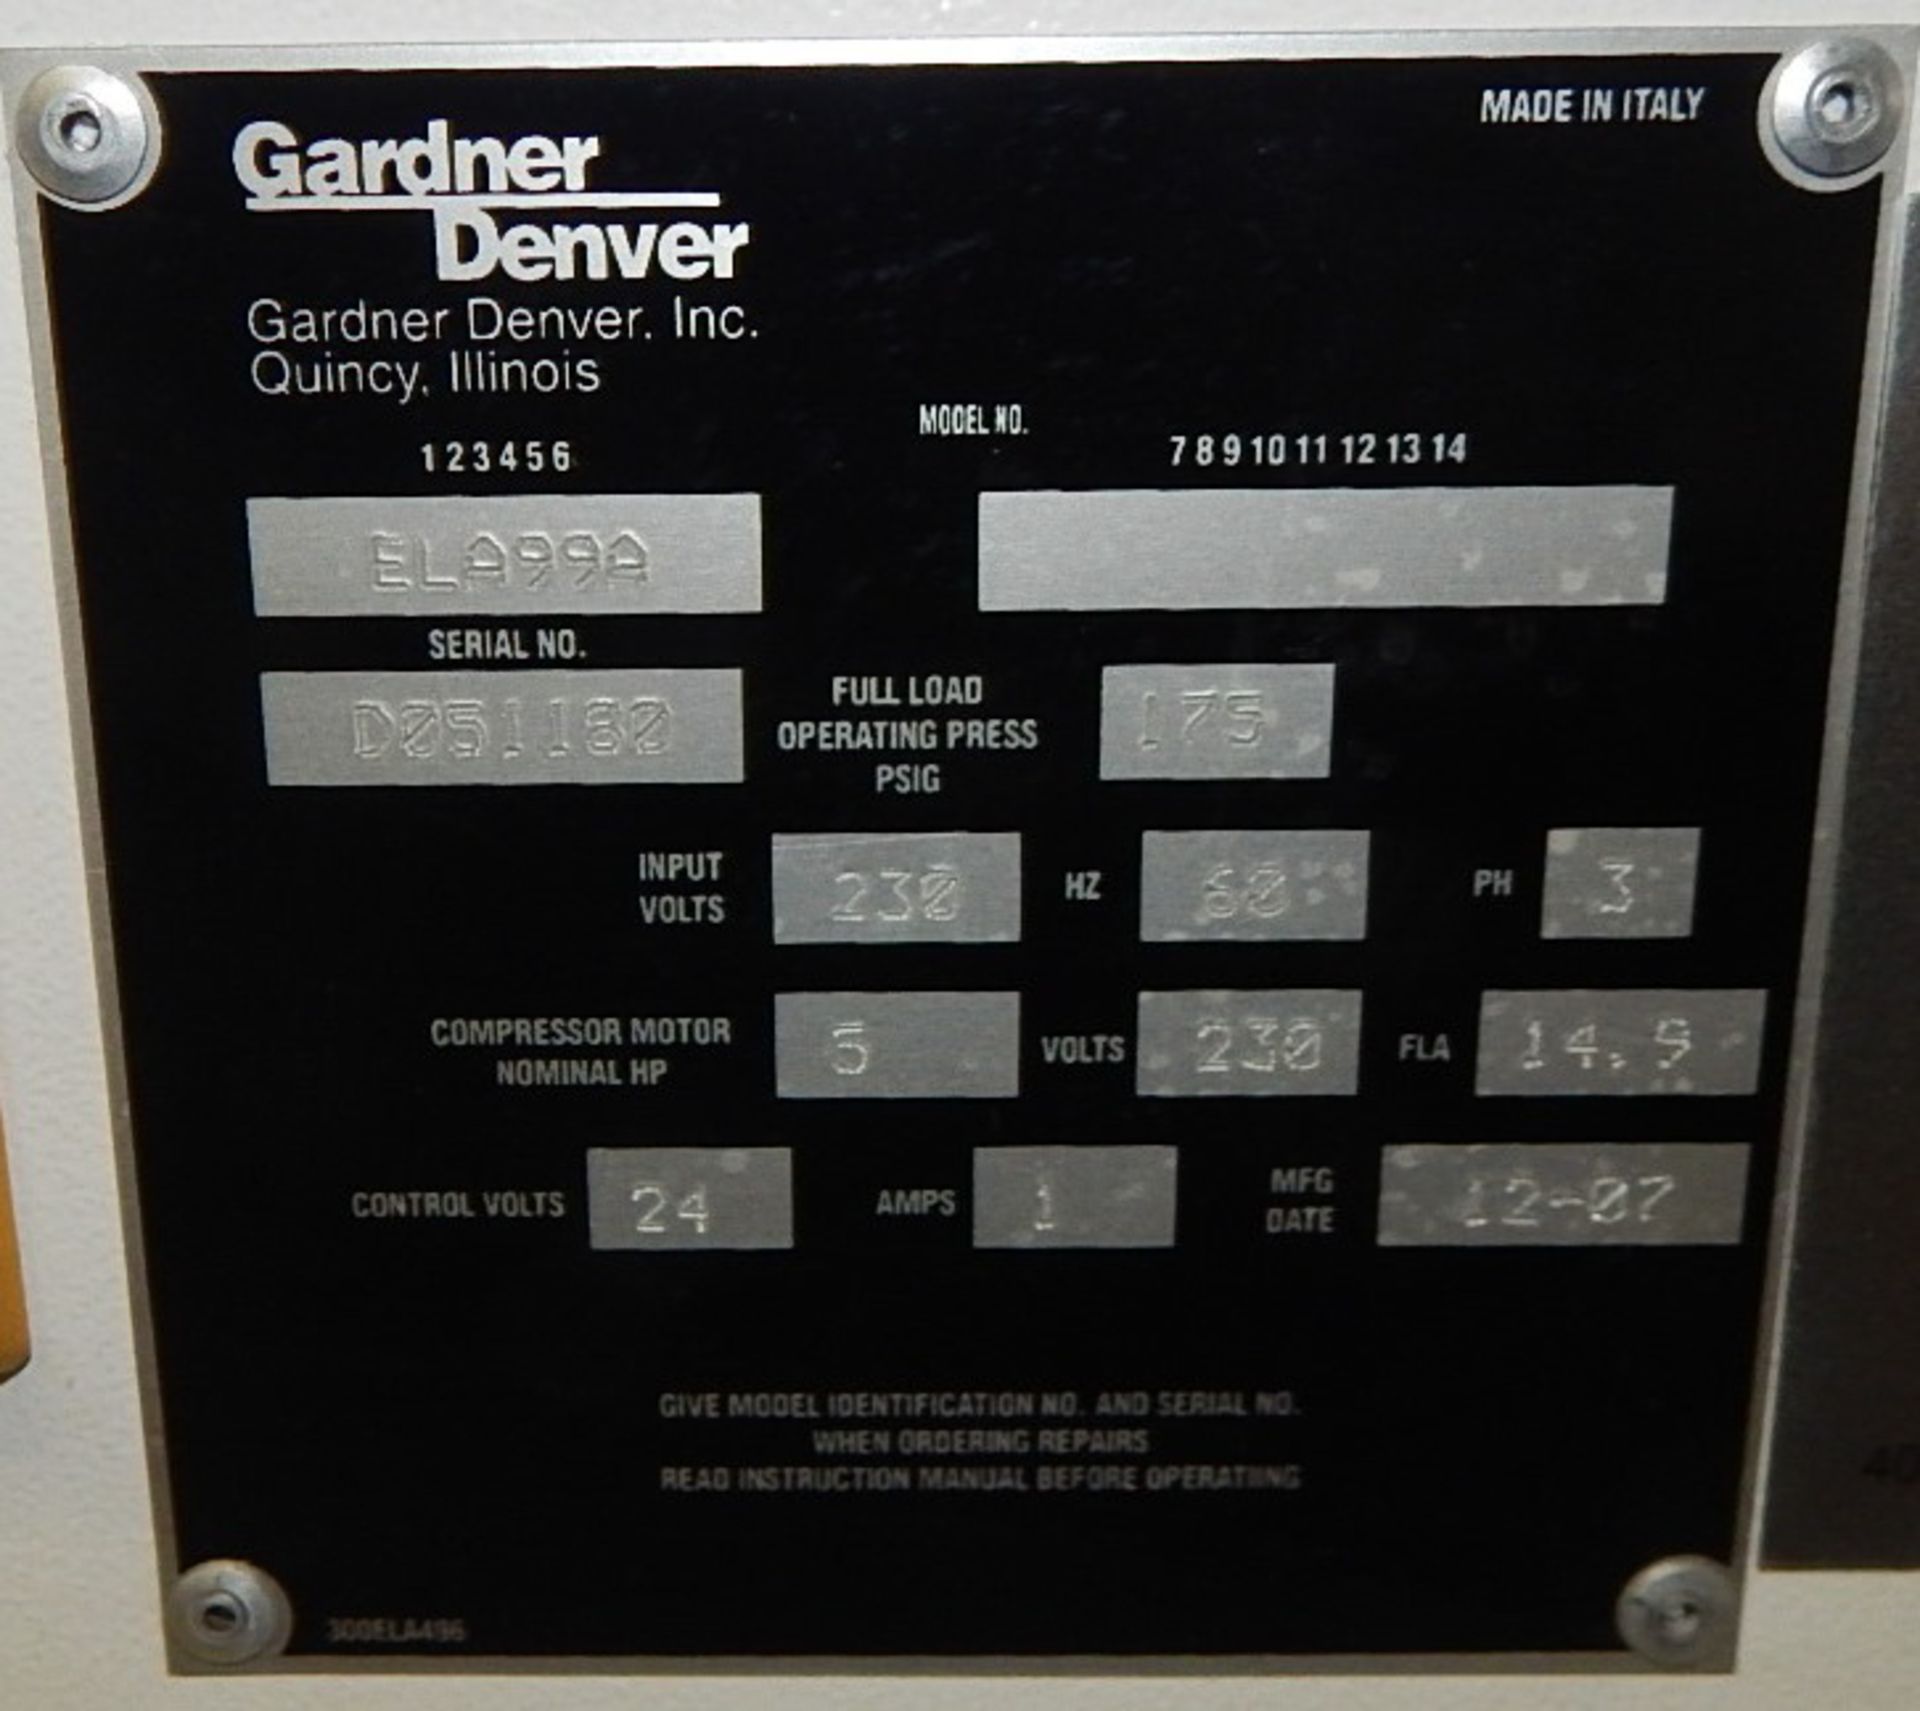 GARDNER DENVER (2007) ENDURAIR ELA99A TANK-MOUNTED ROTARY SCREW AIR COMPRESSOR WITH 5 HP, 175 PSI, - Image 6 of 6